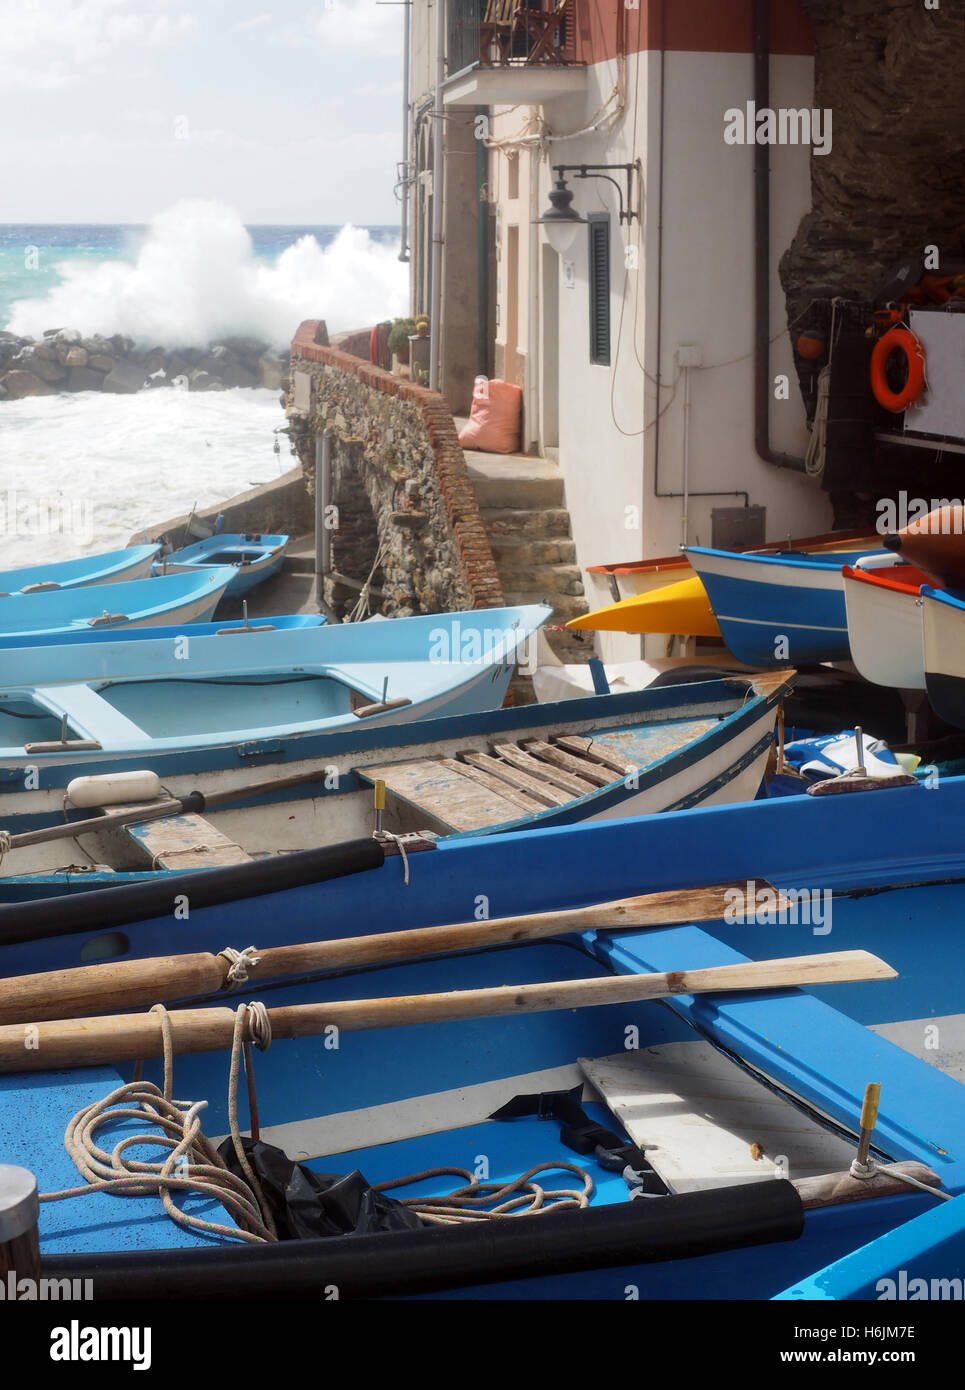 La pêche de petits bateaux à rame sur terre pendant l'état de la mer Rio Maggiore Cinque Terre Italie Europe Banque D'Images